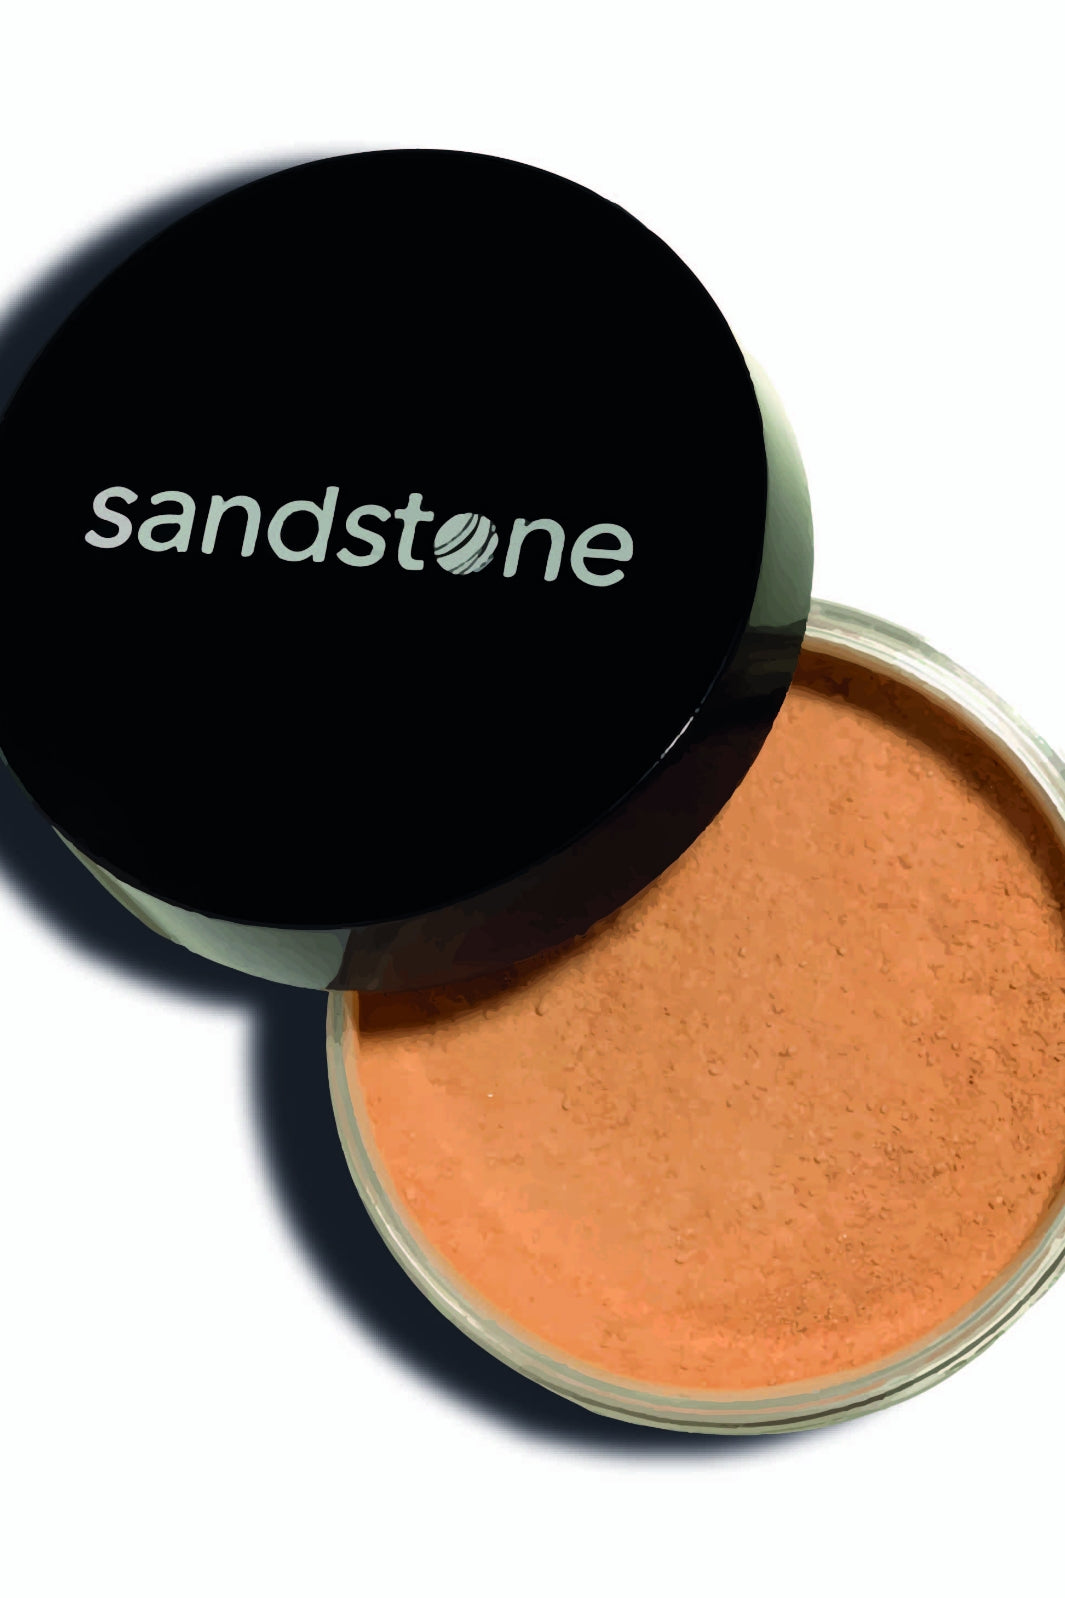 Sandstone - Velvet Skin Mineral Powder - 05 Caramel Makeup 